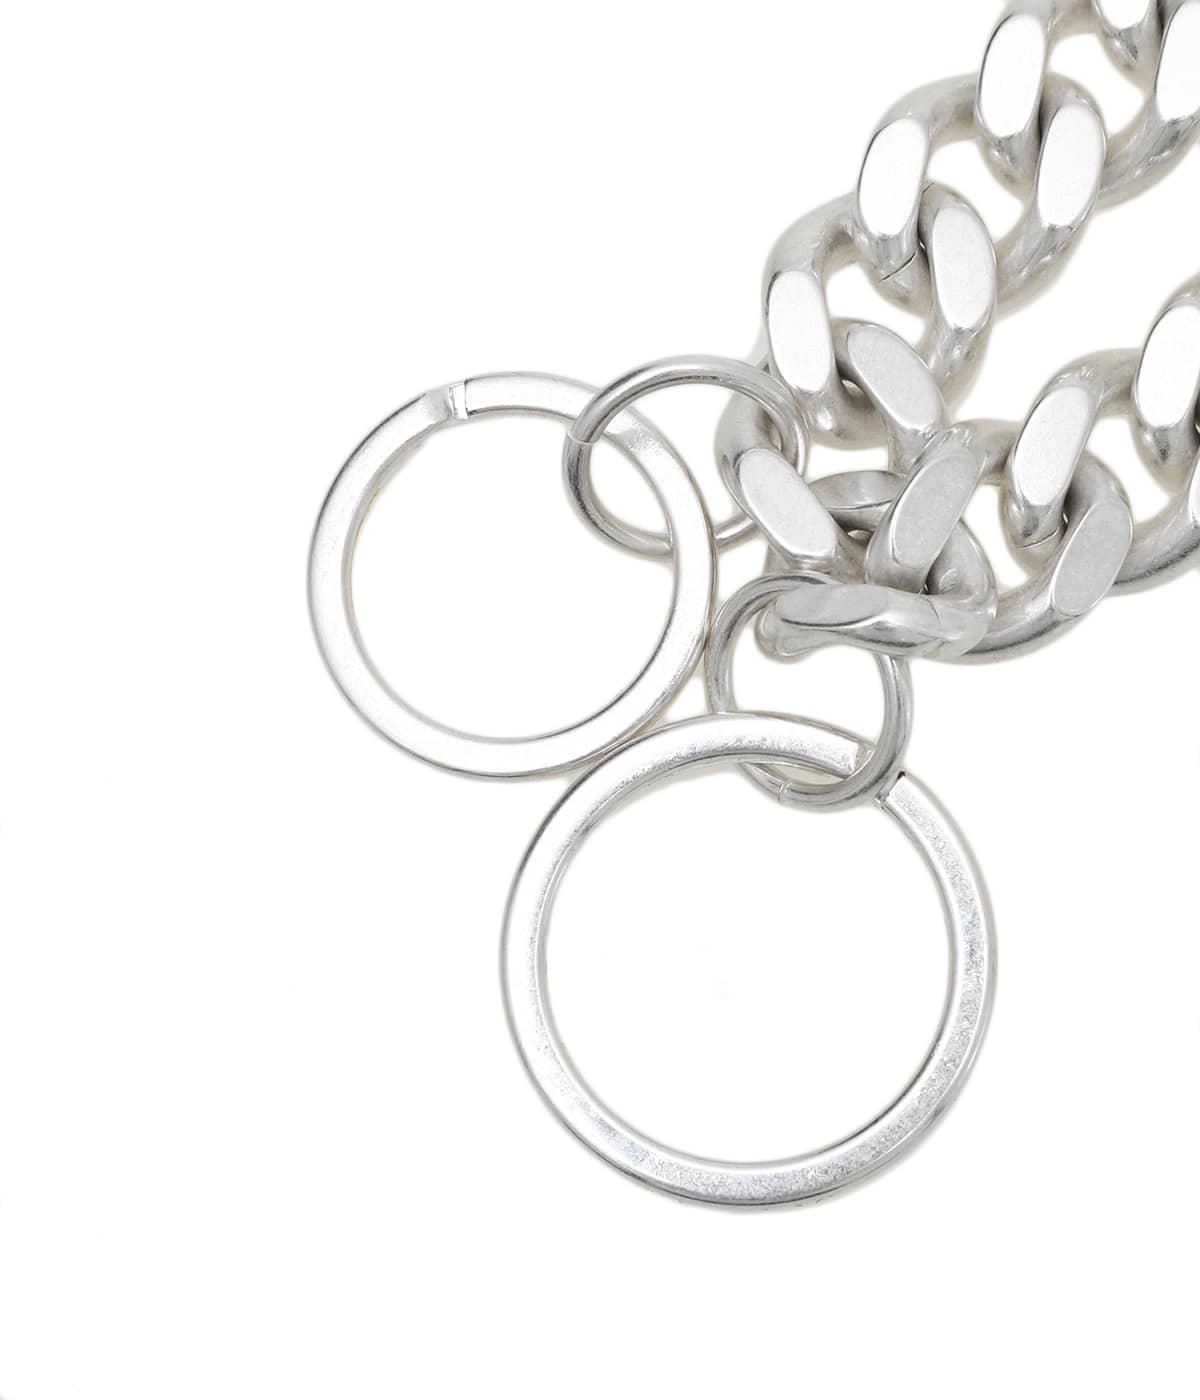 Oventure, The Original Bracelet Keychain, Silicone Big O Key Ring